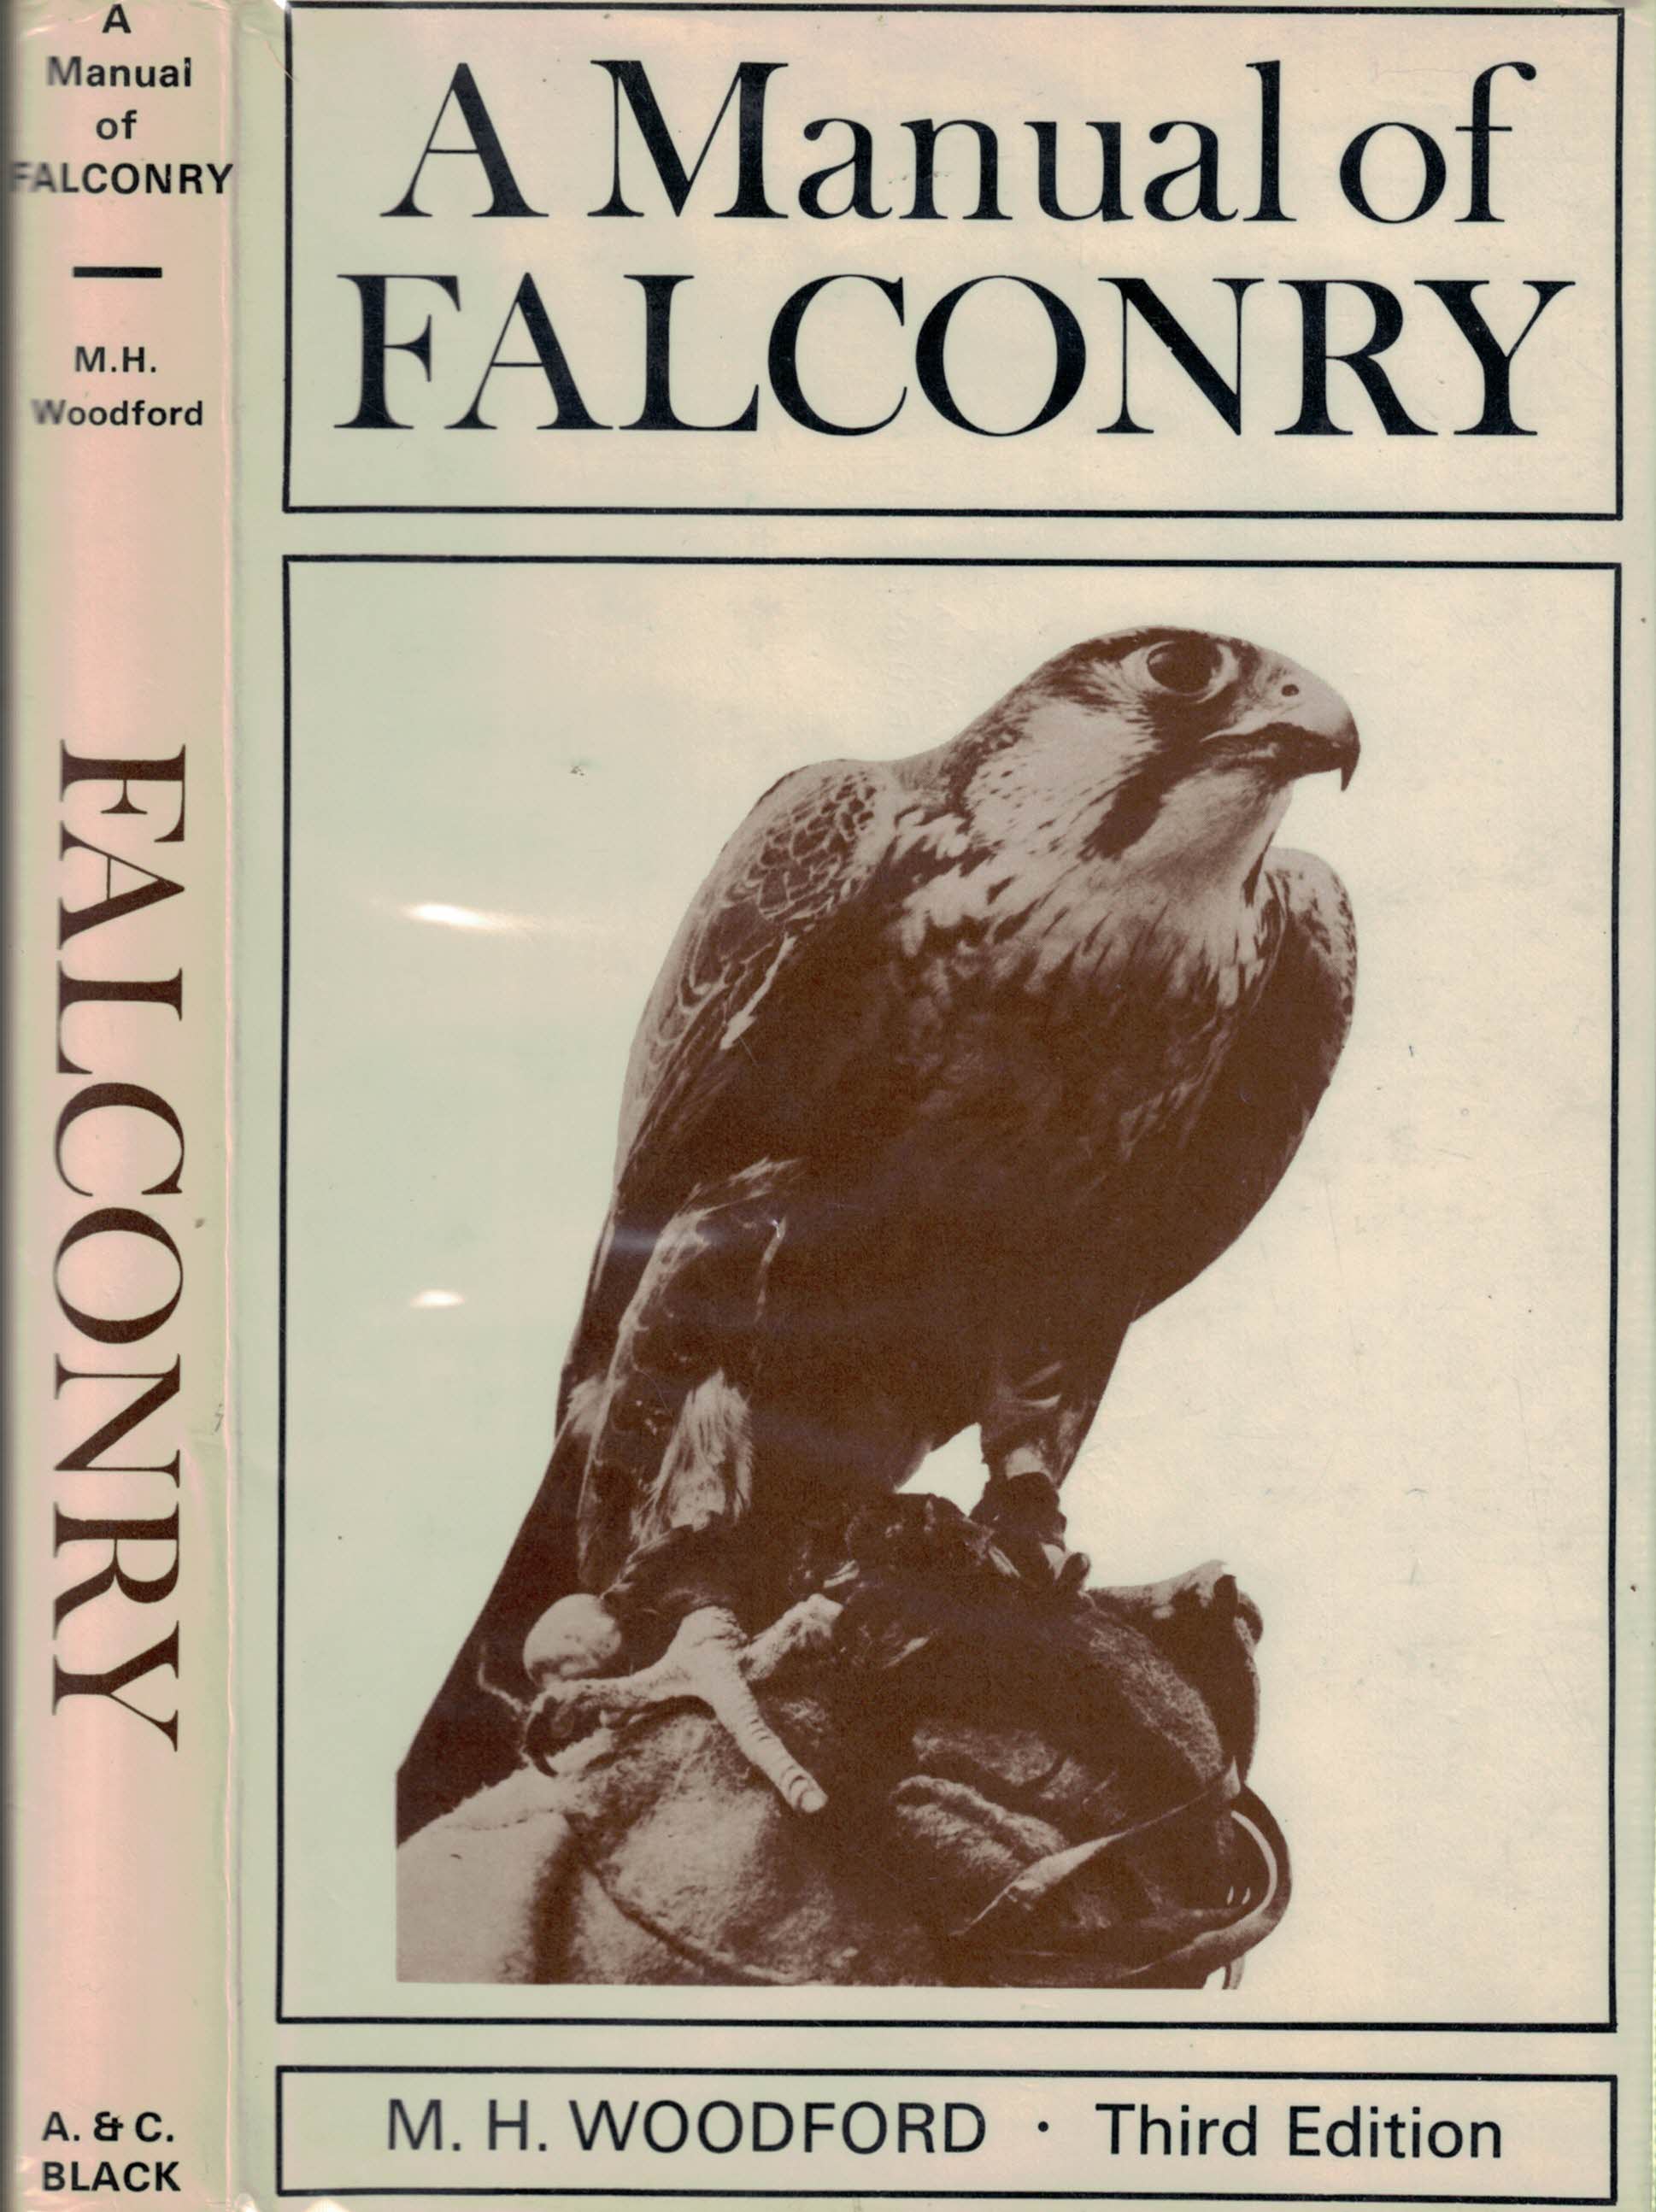 A Manual of Falconry. 1981.